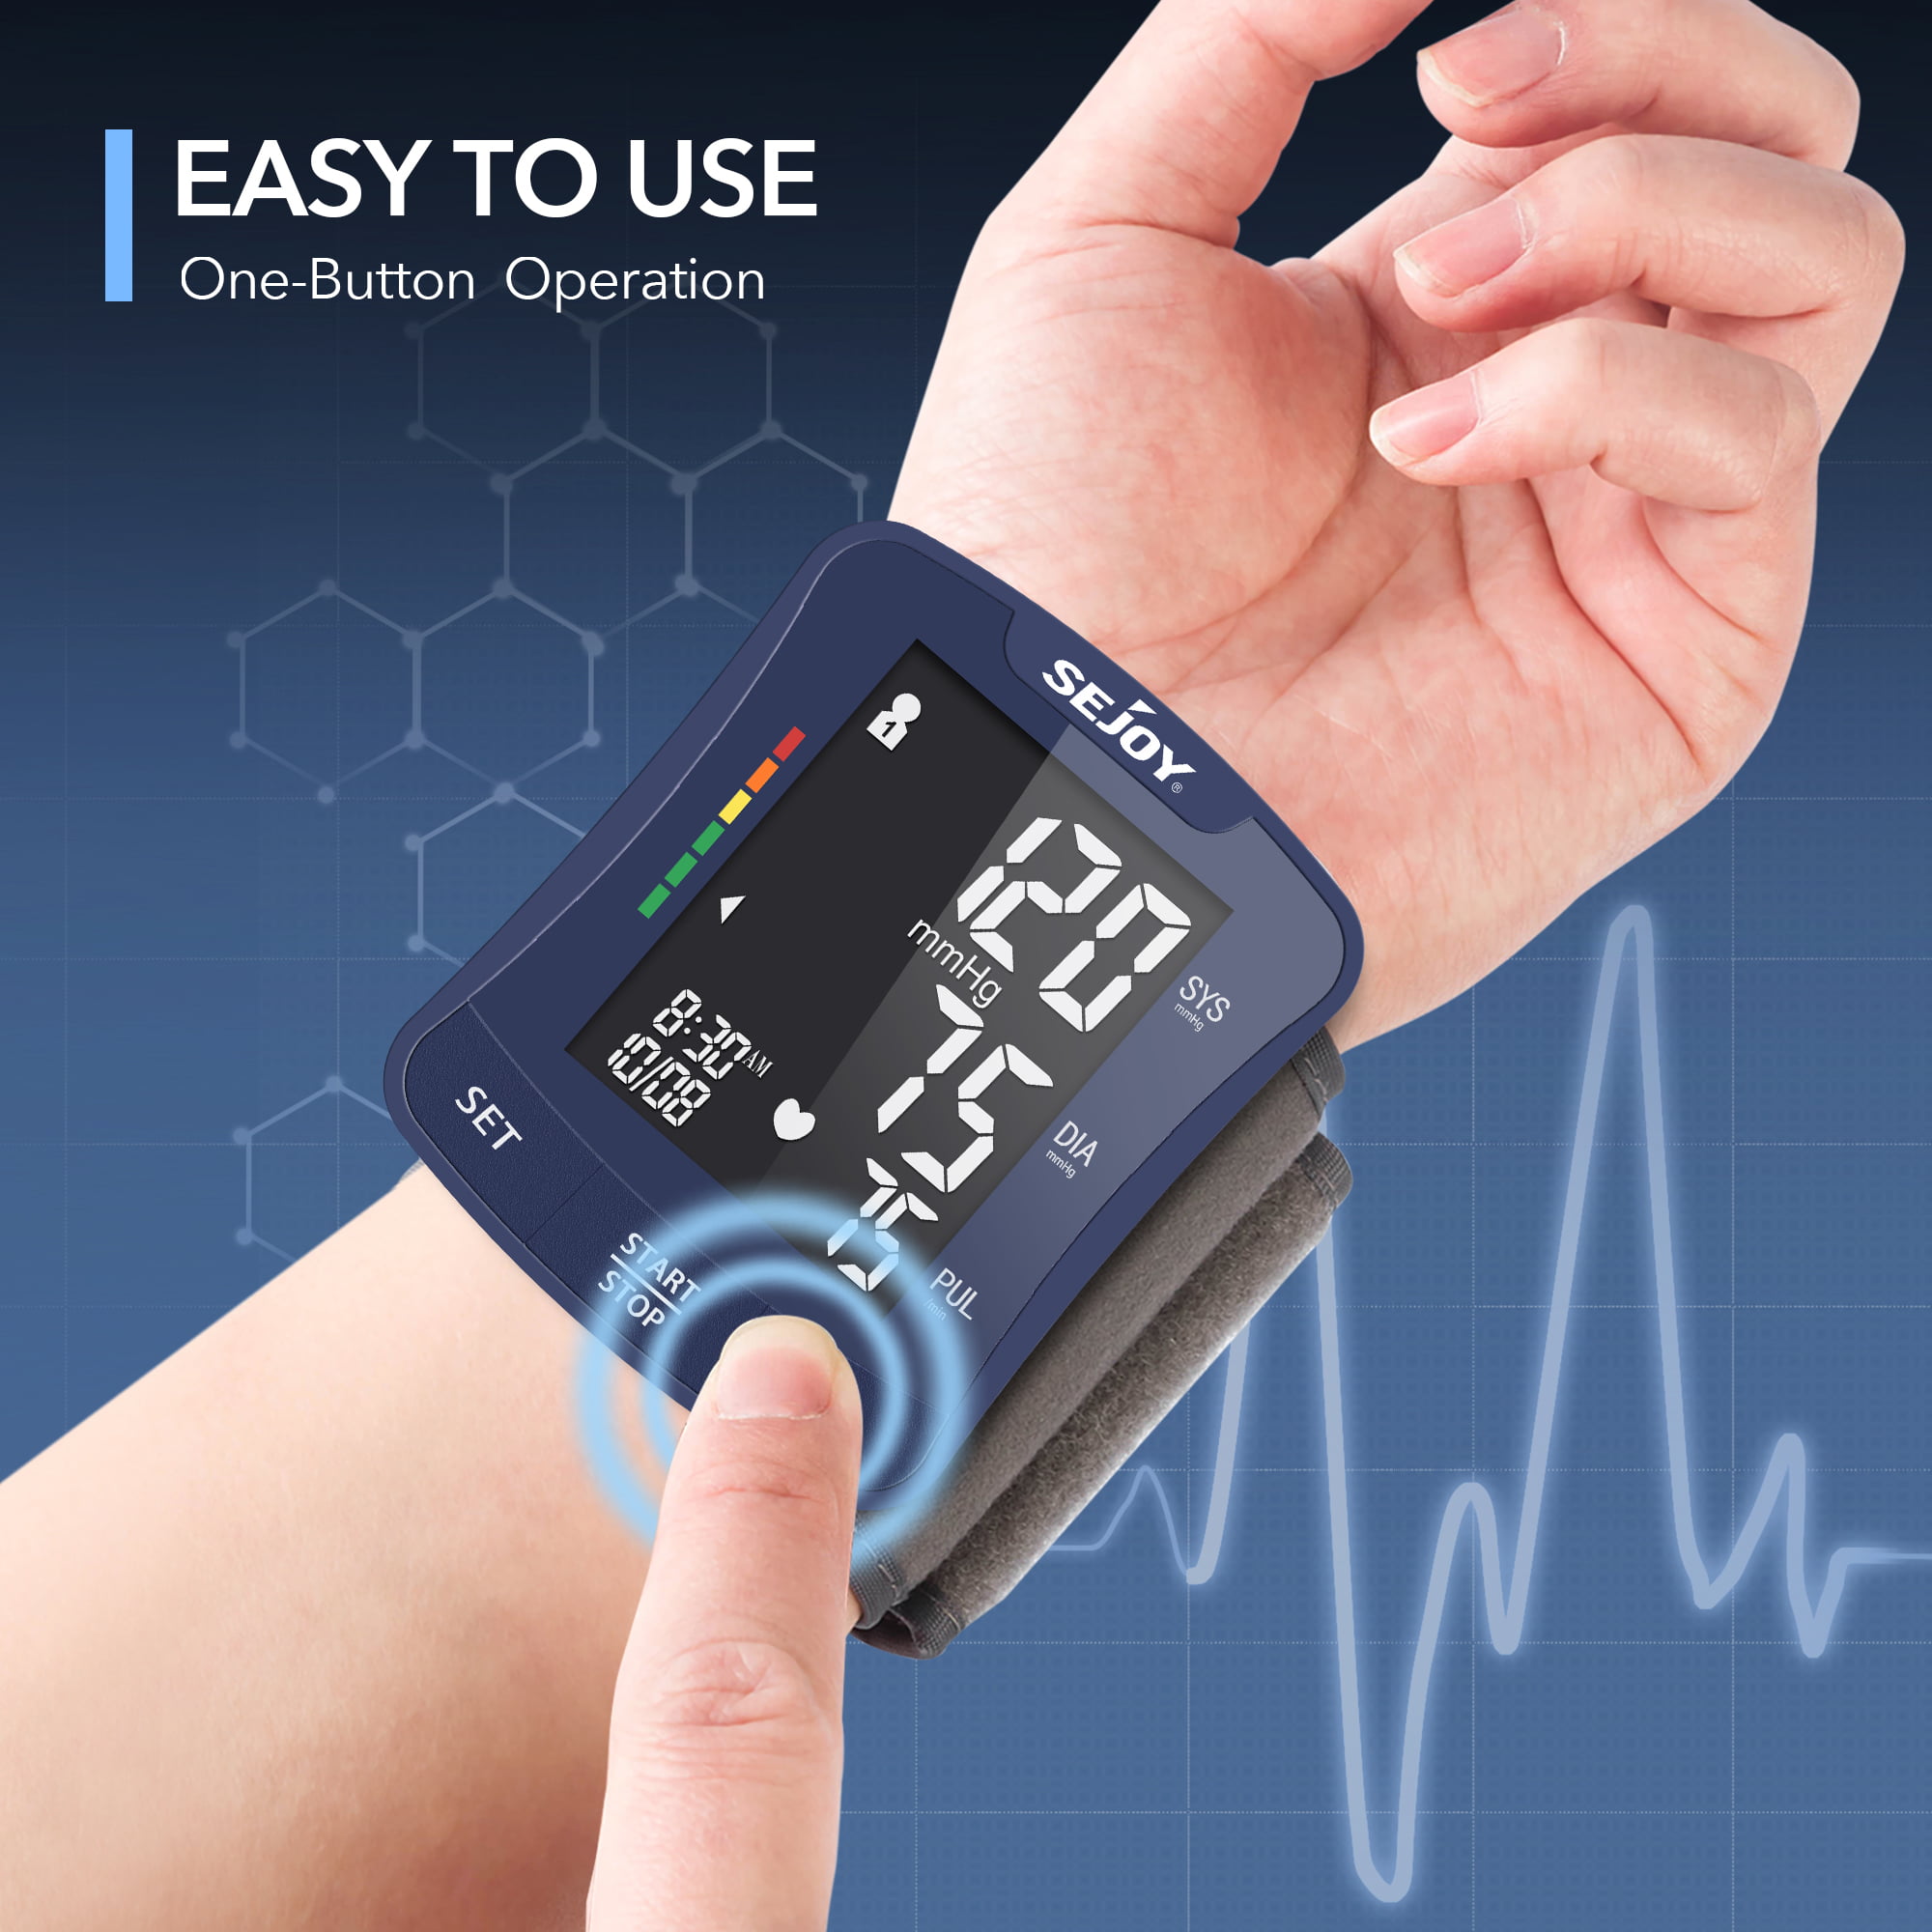 Southeastern Medical Supply, Inc - Omron BP-670it Wrist Blood Pressure  Monitor